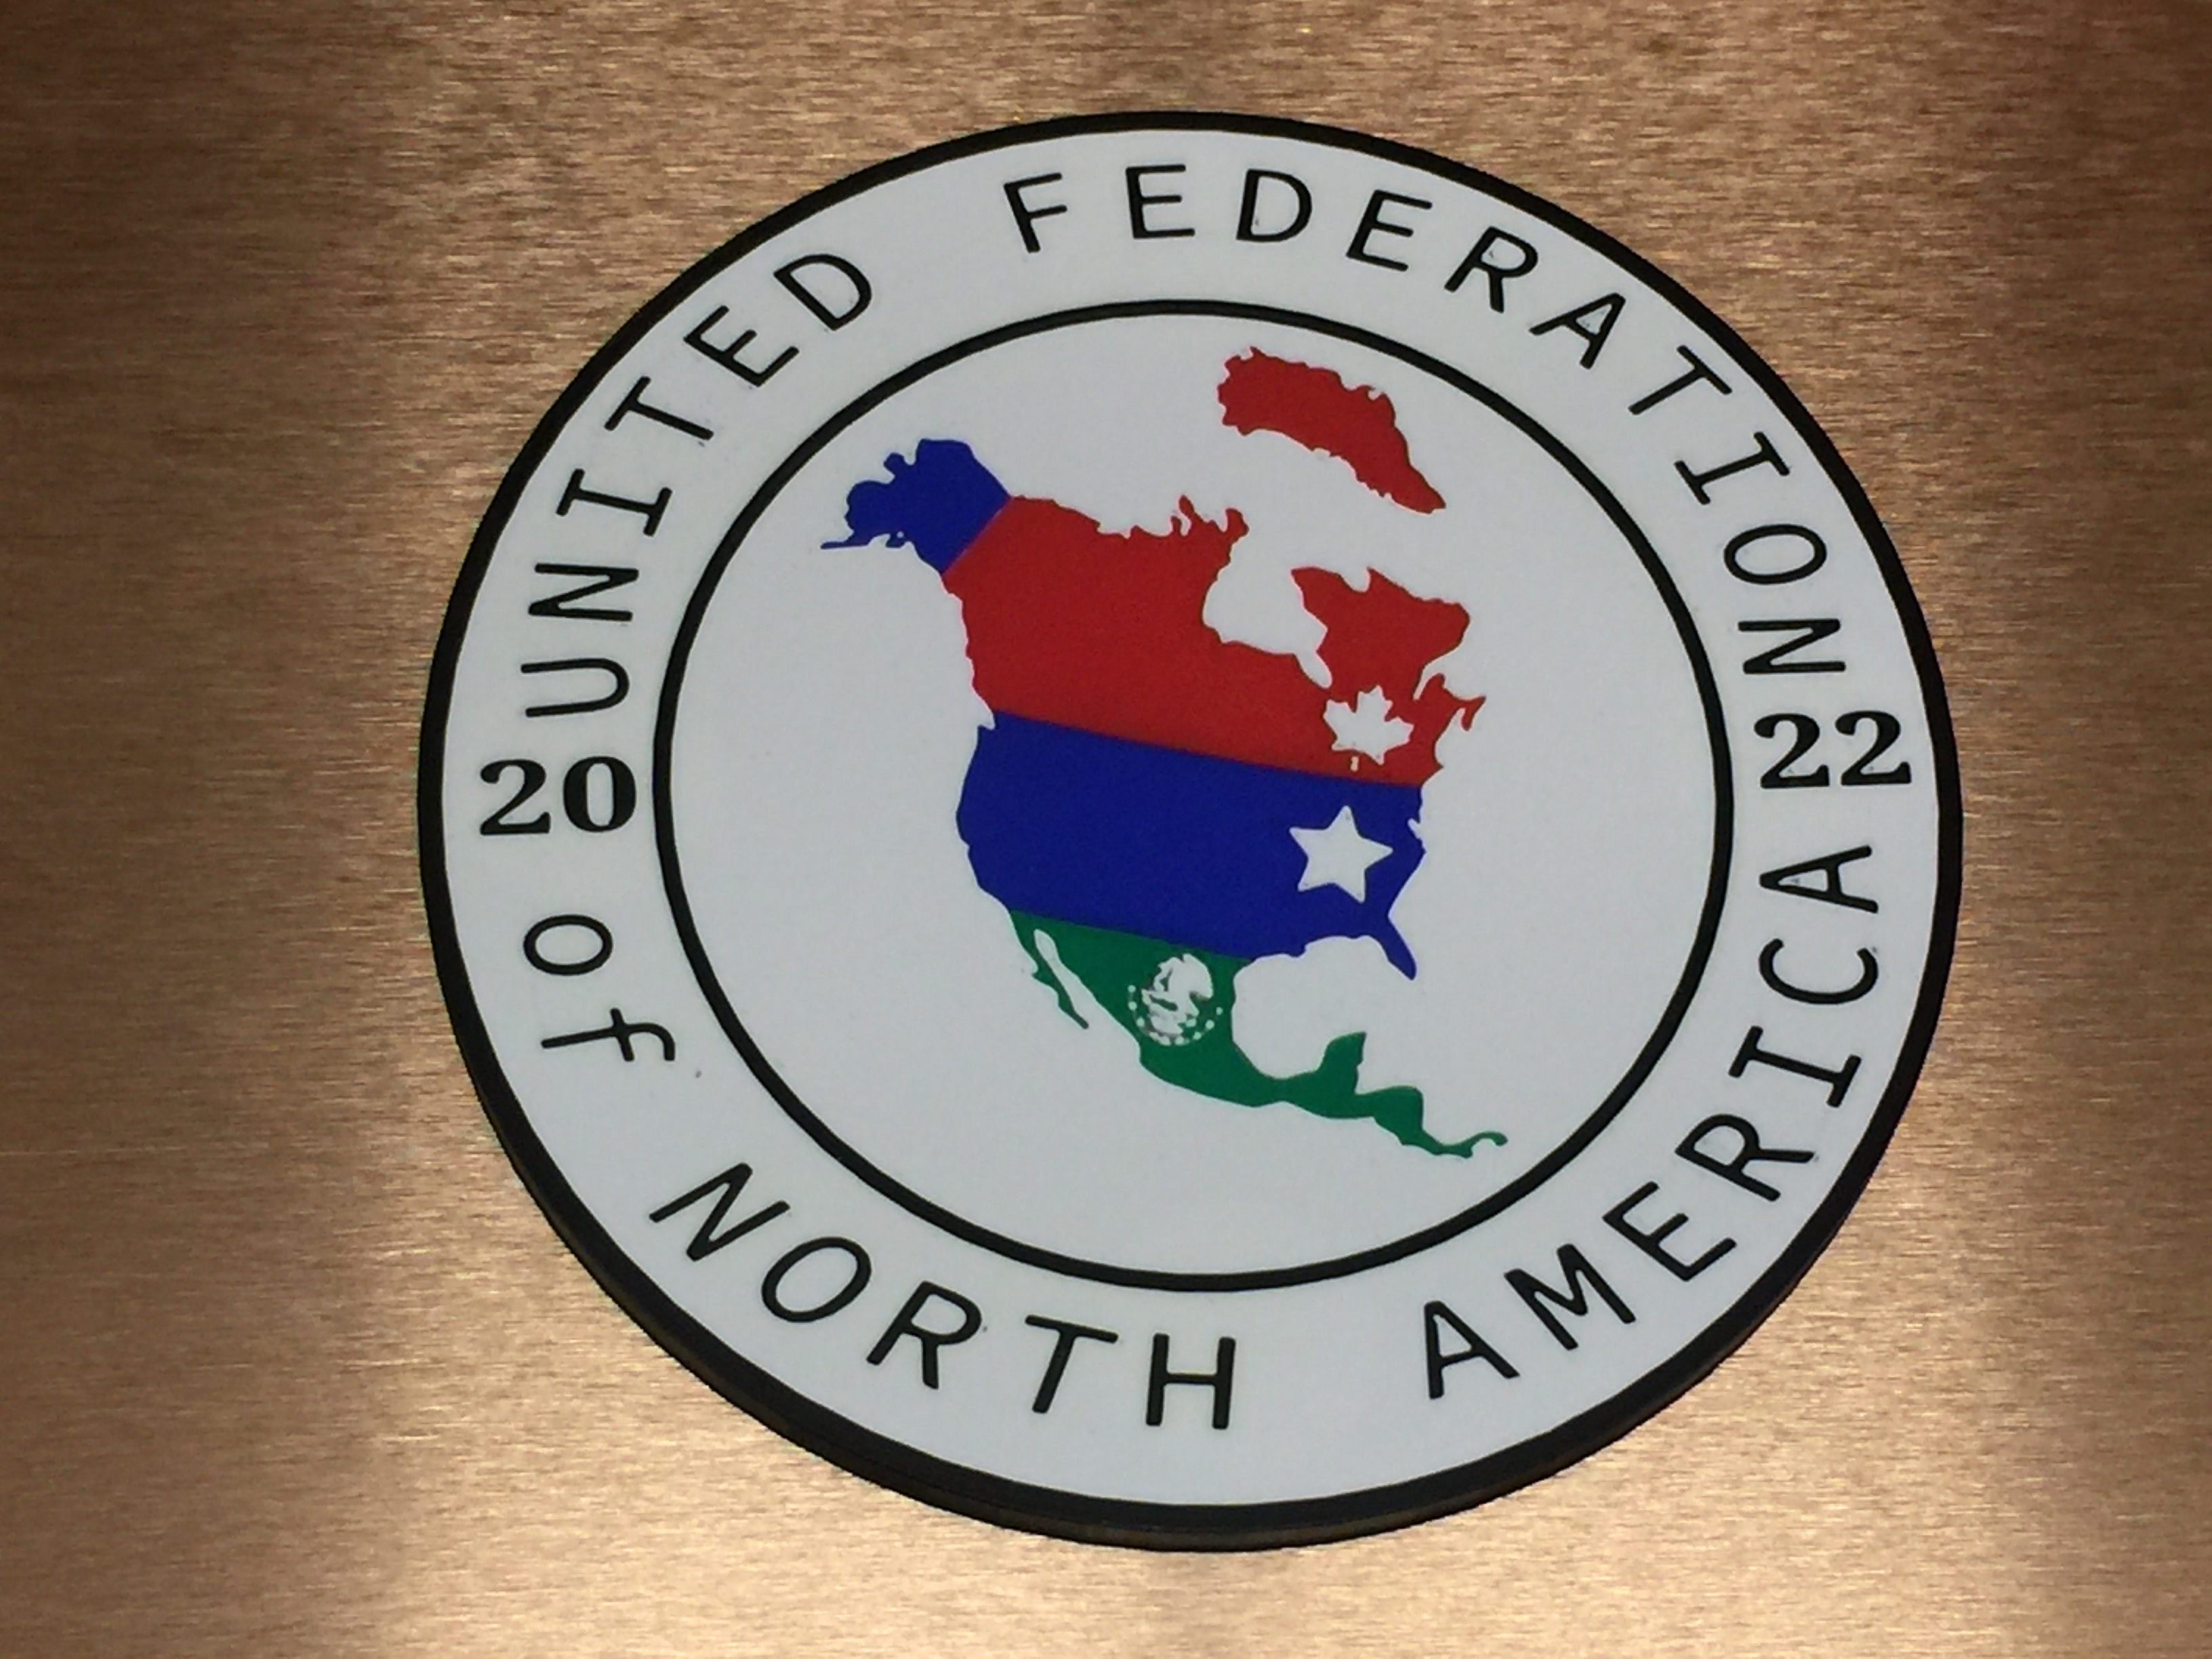 United Federation of North America